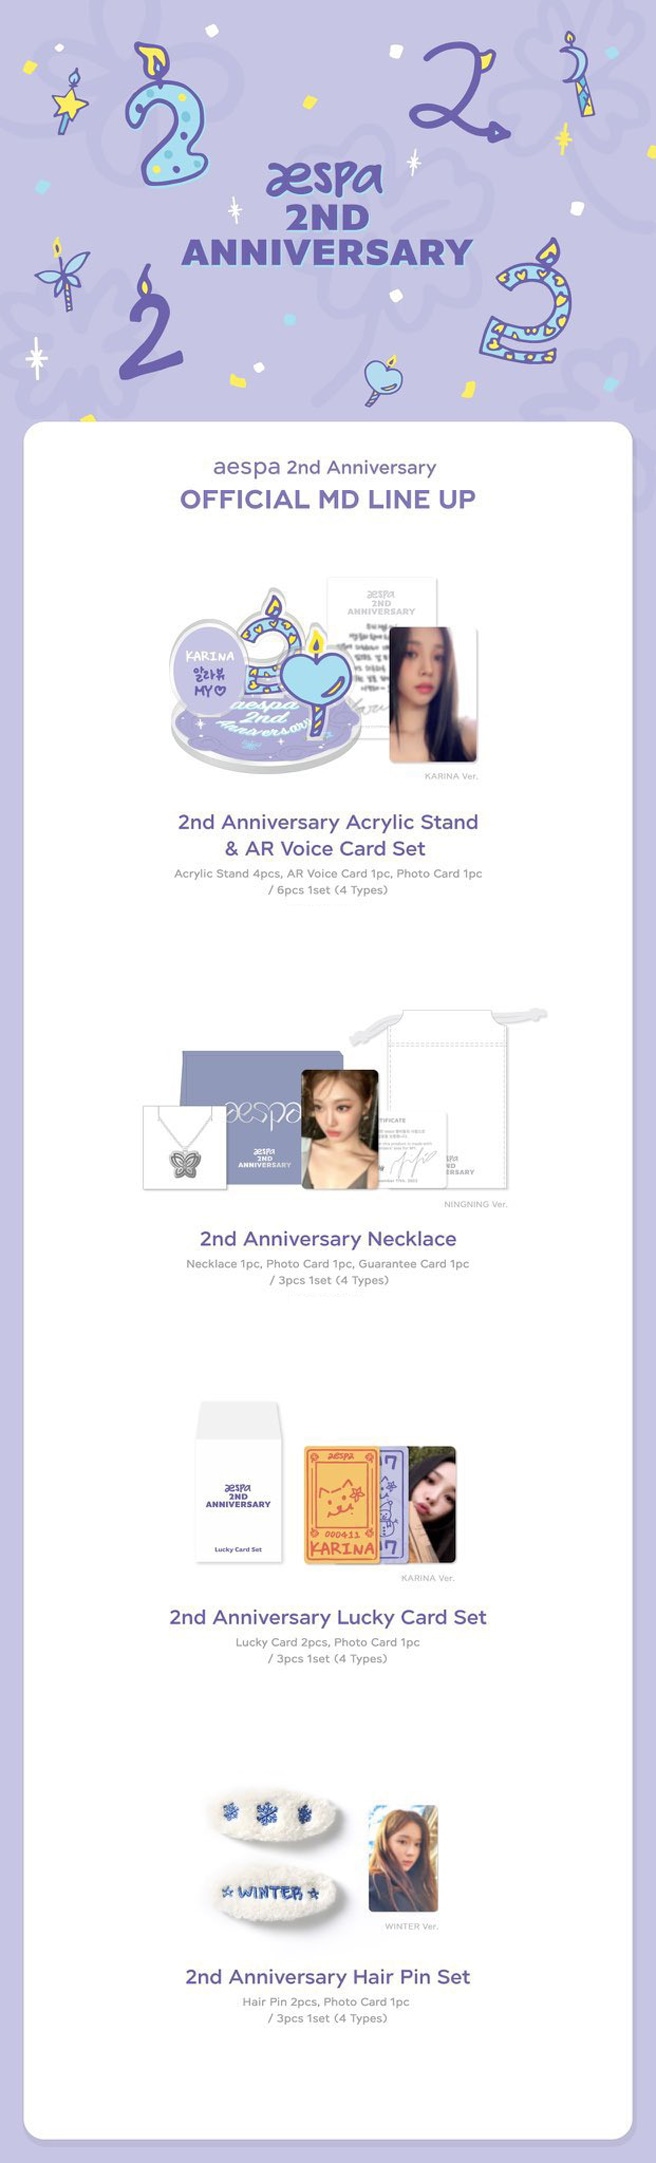 予約】aespa Lucky Card Set_2nd Anniversary MD